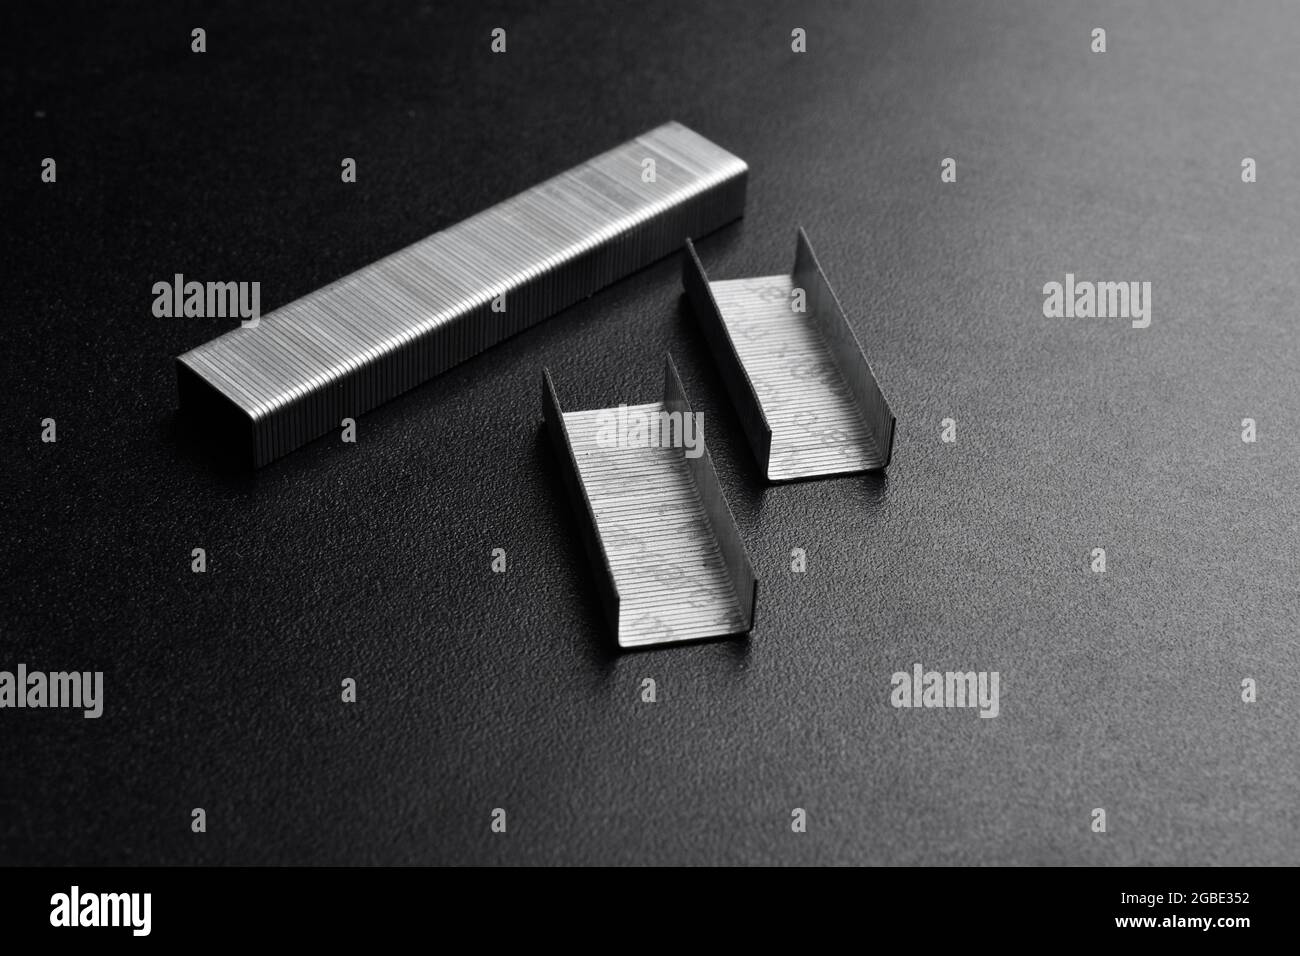 Stapler Pin On Dark Background Stock Photo